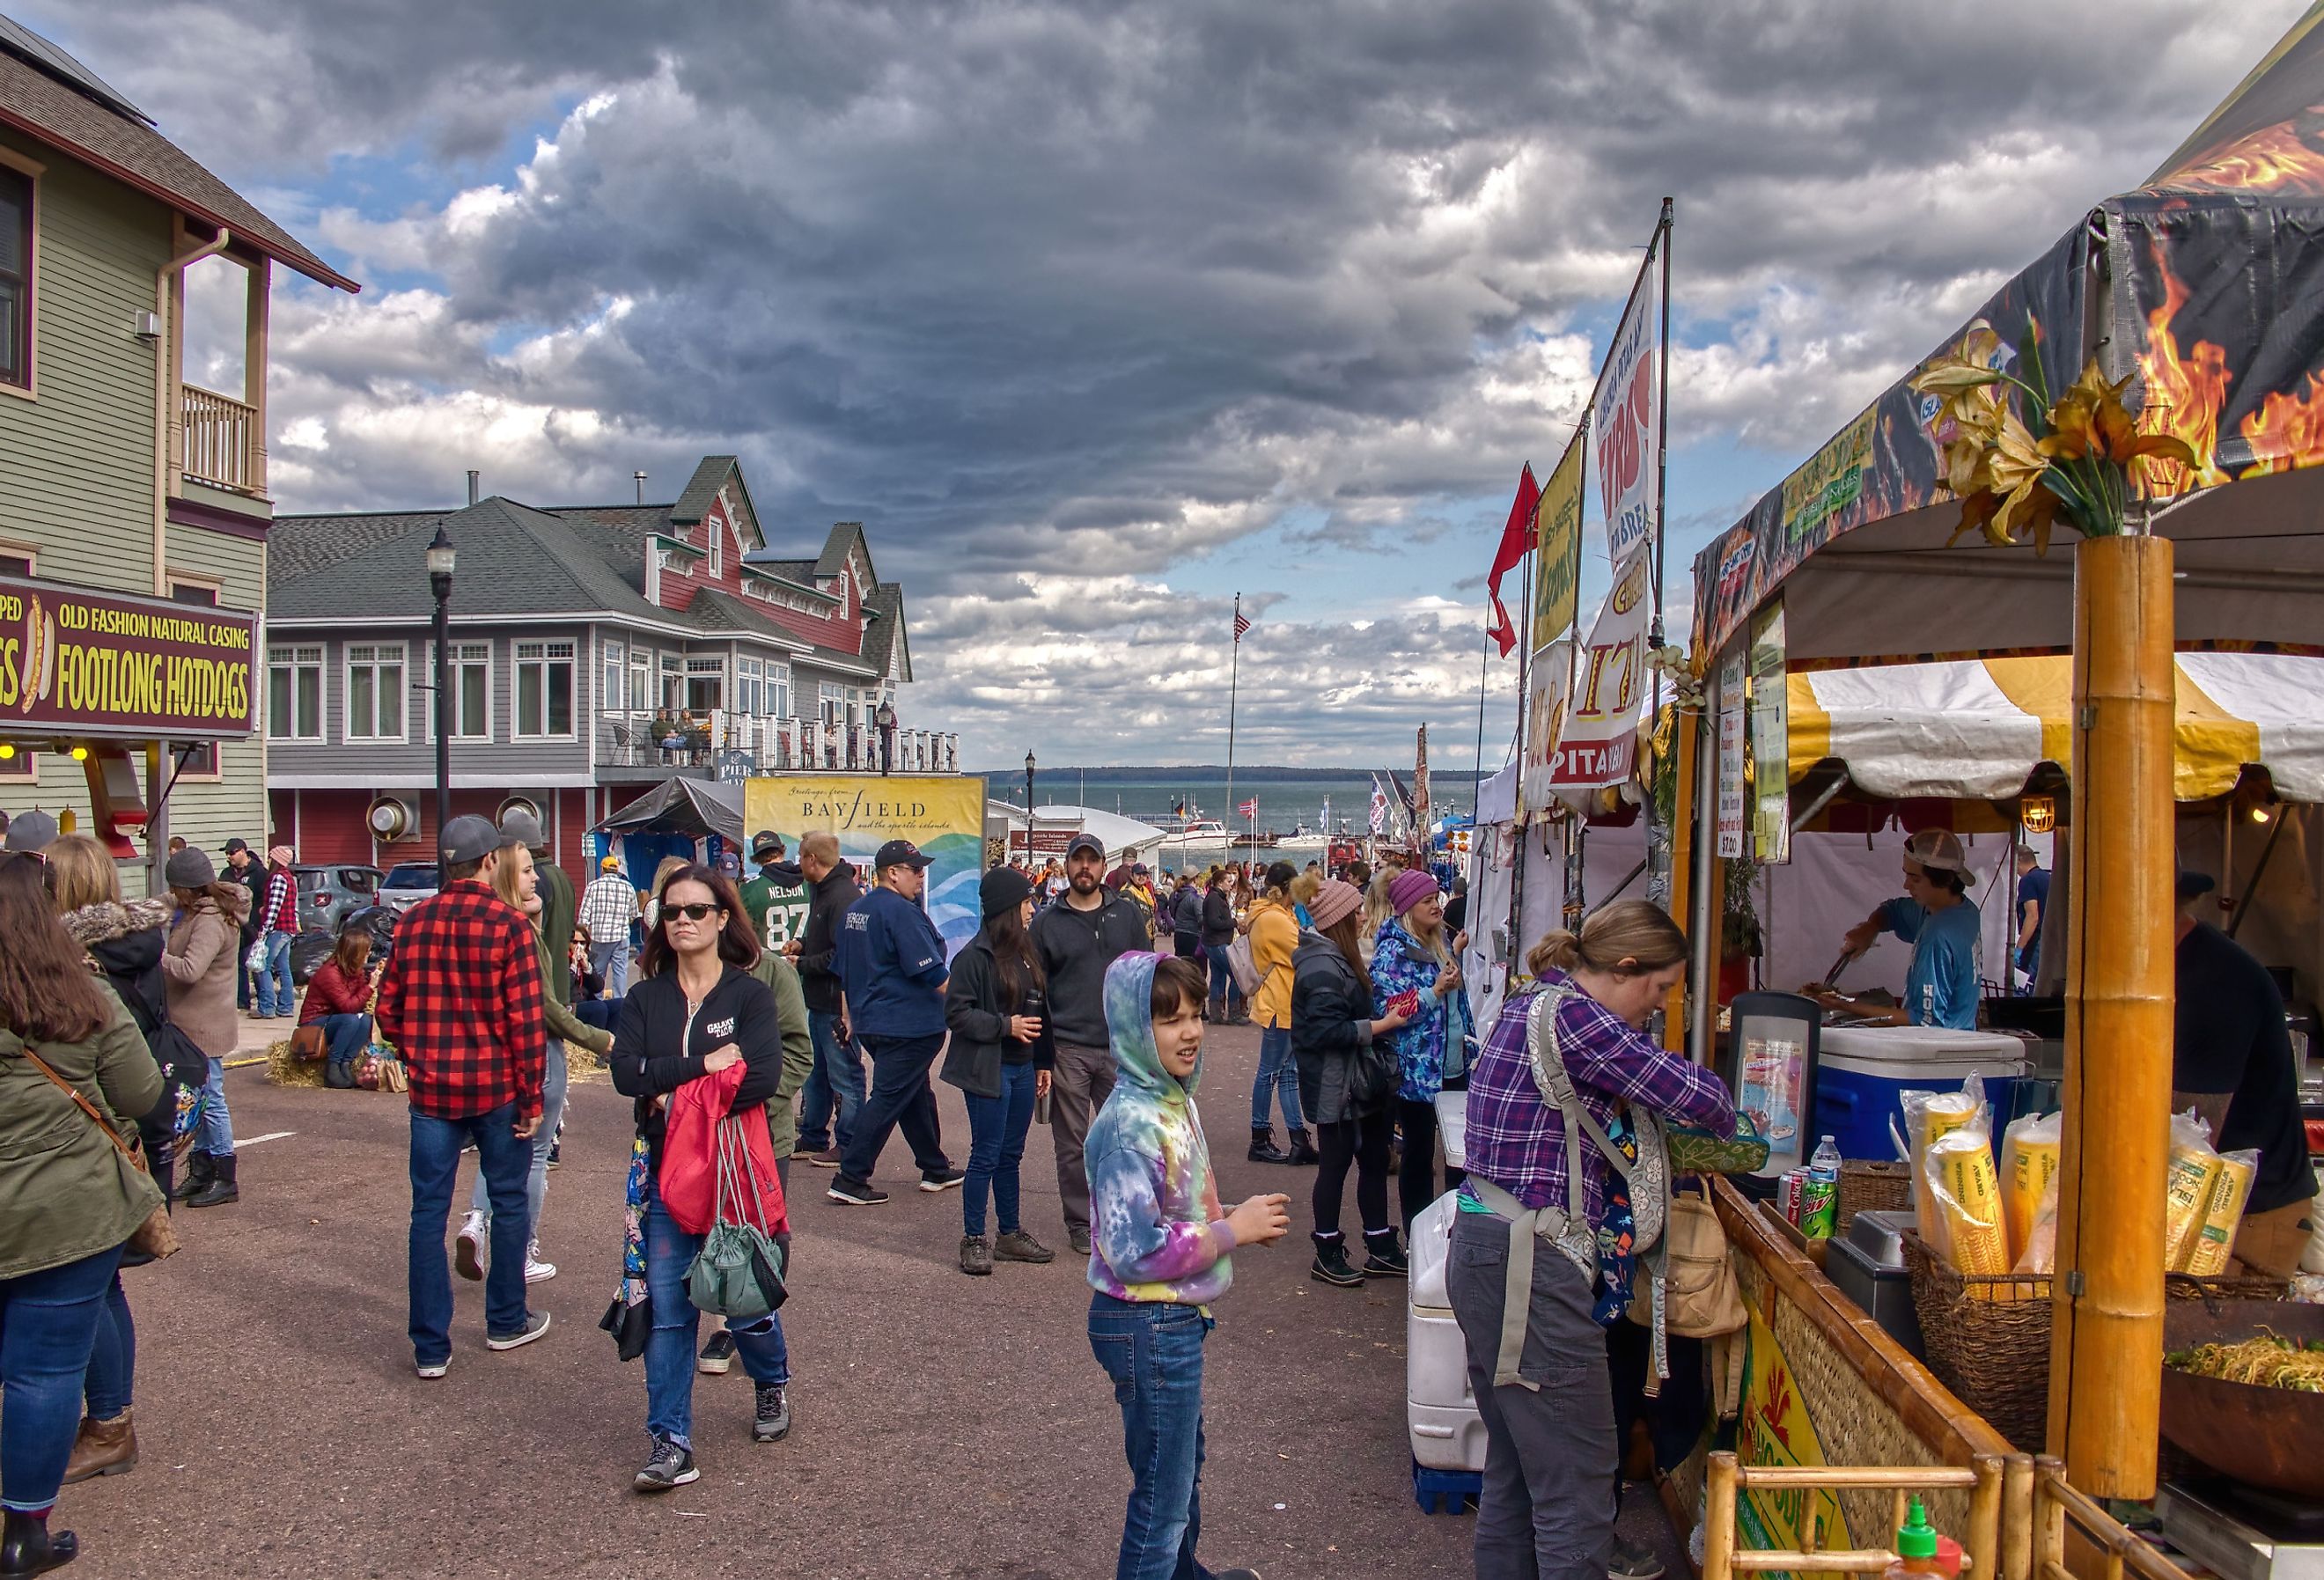 People enjoy the Annual Applefest, Bayfield, Wisconsin. Image credit Jacob Boomsma via Shutterstock